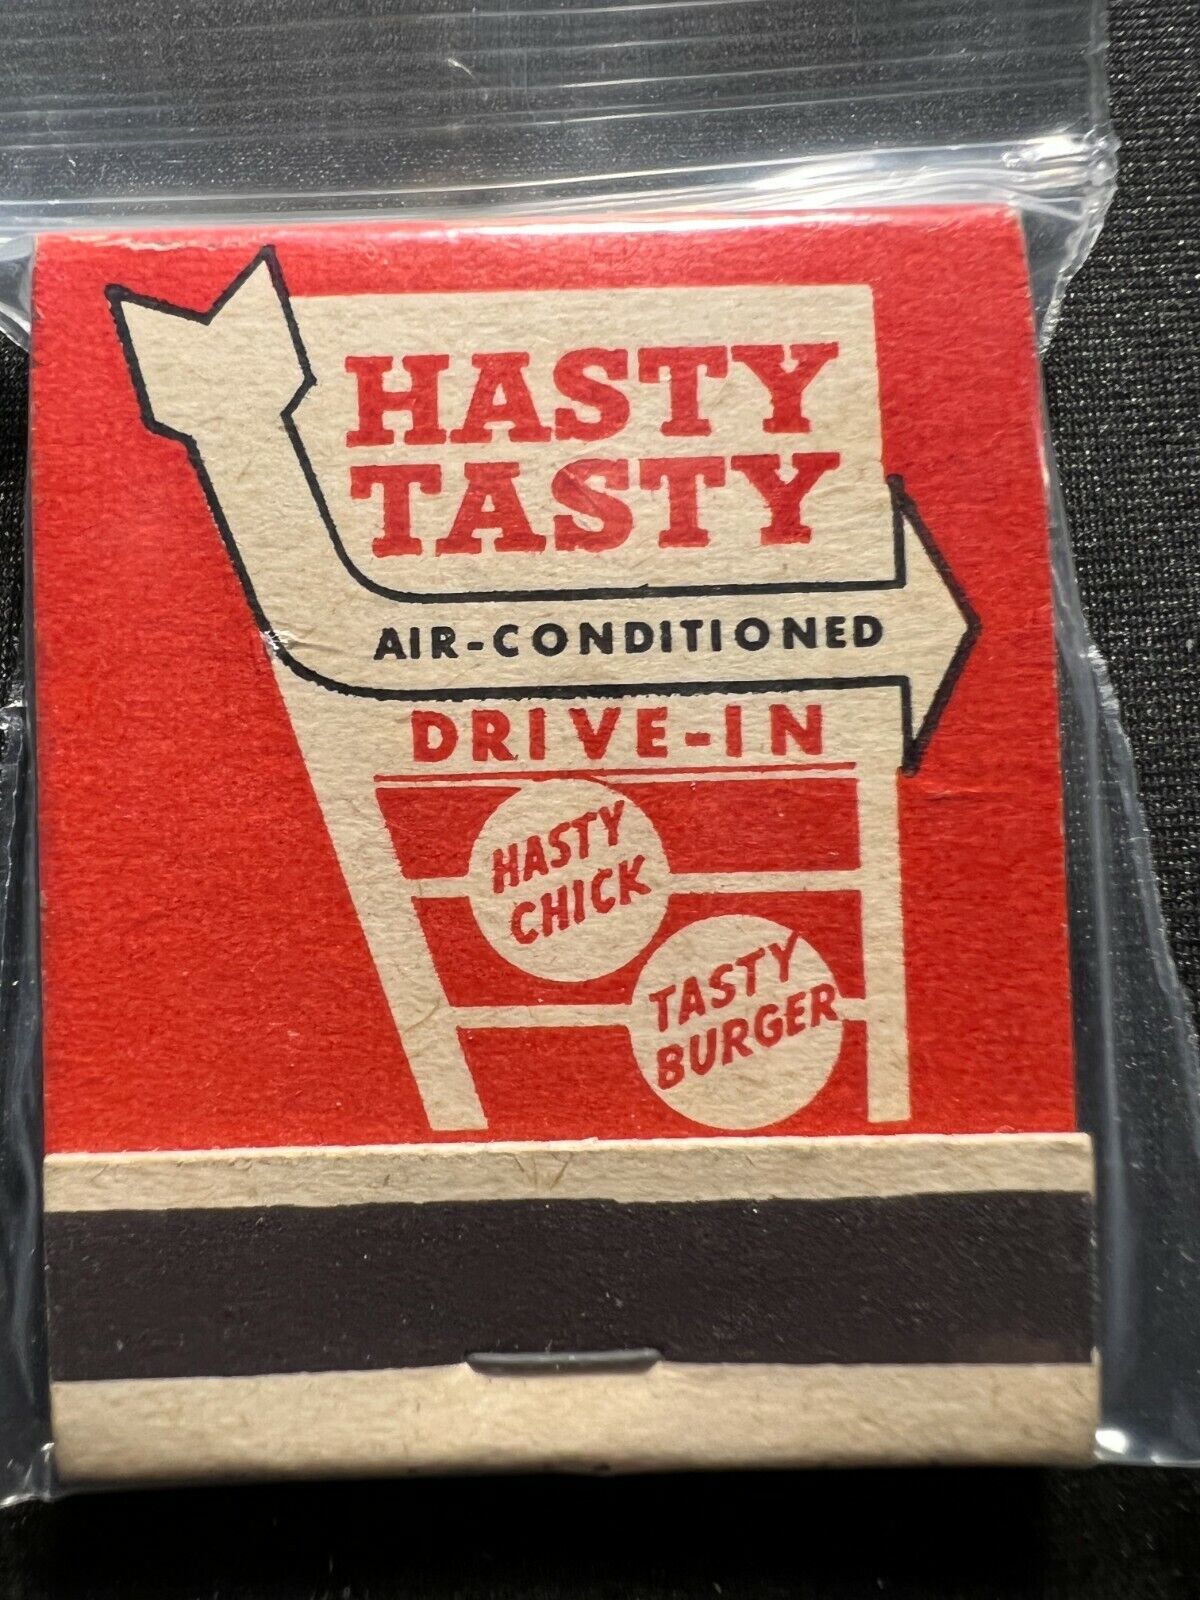 VINTAGE MATCHBOOK - HASTY TASTY DRIVE-IN RESTAURANTS - HASTY CHICK - UNSTRUCK